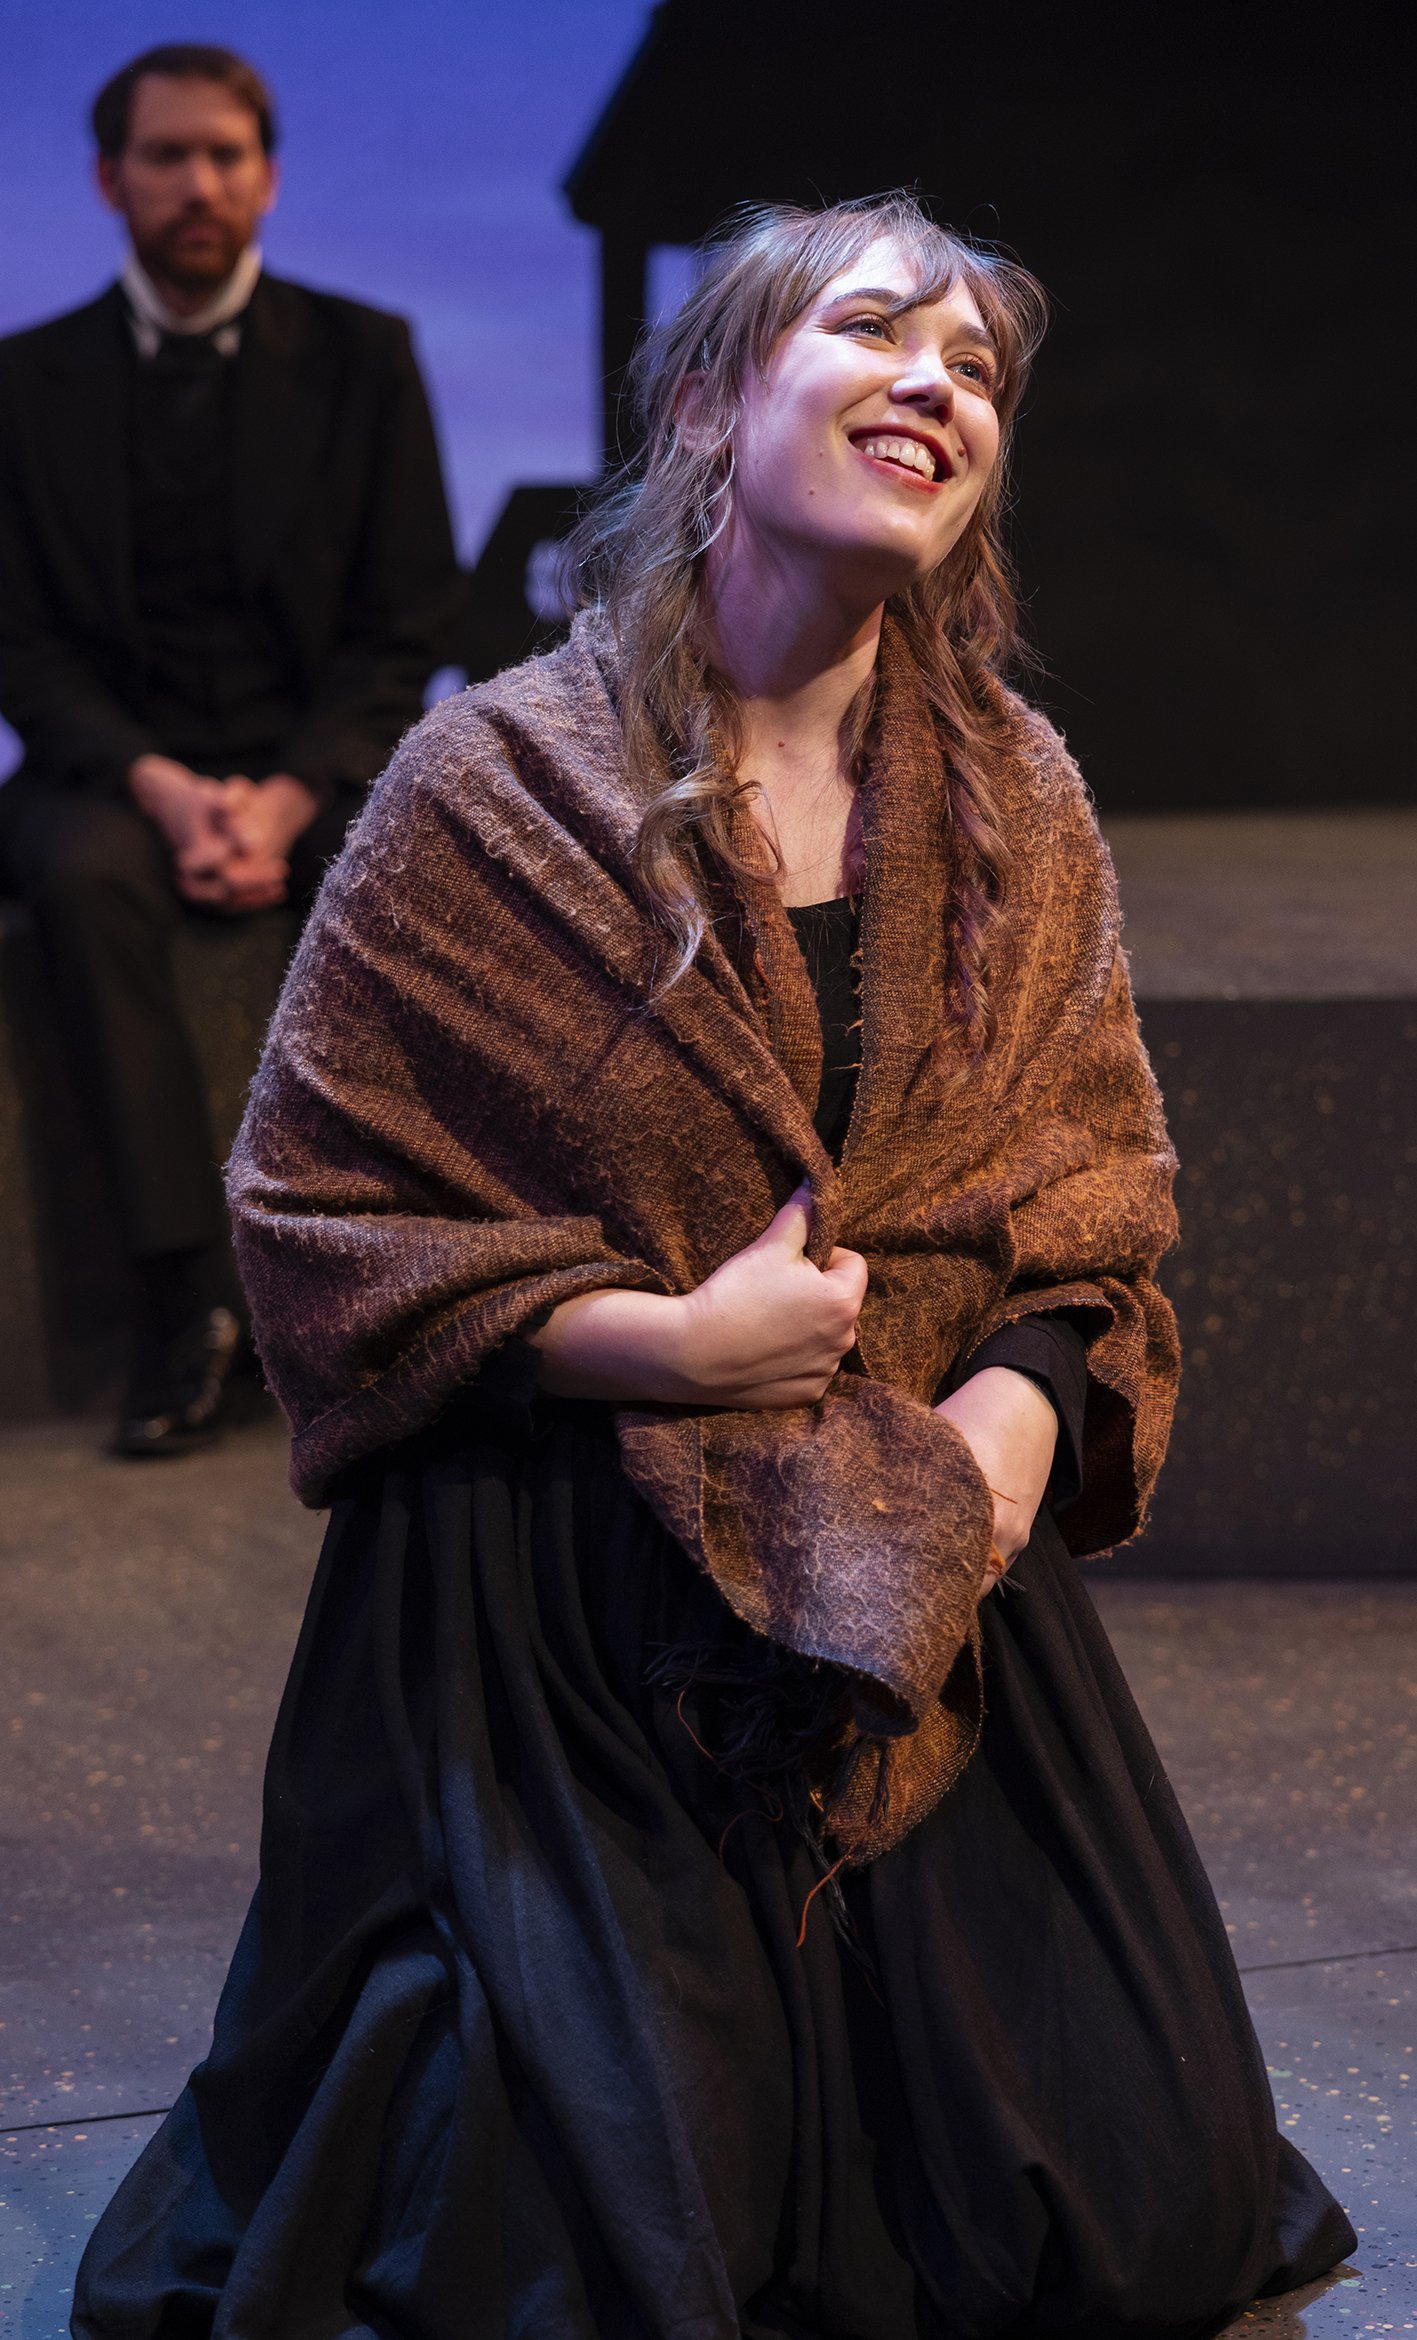 Sophie Gibson Rush as Polly Garter. Photo by Tim Fuller.